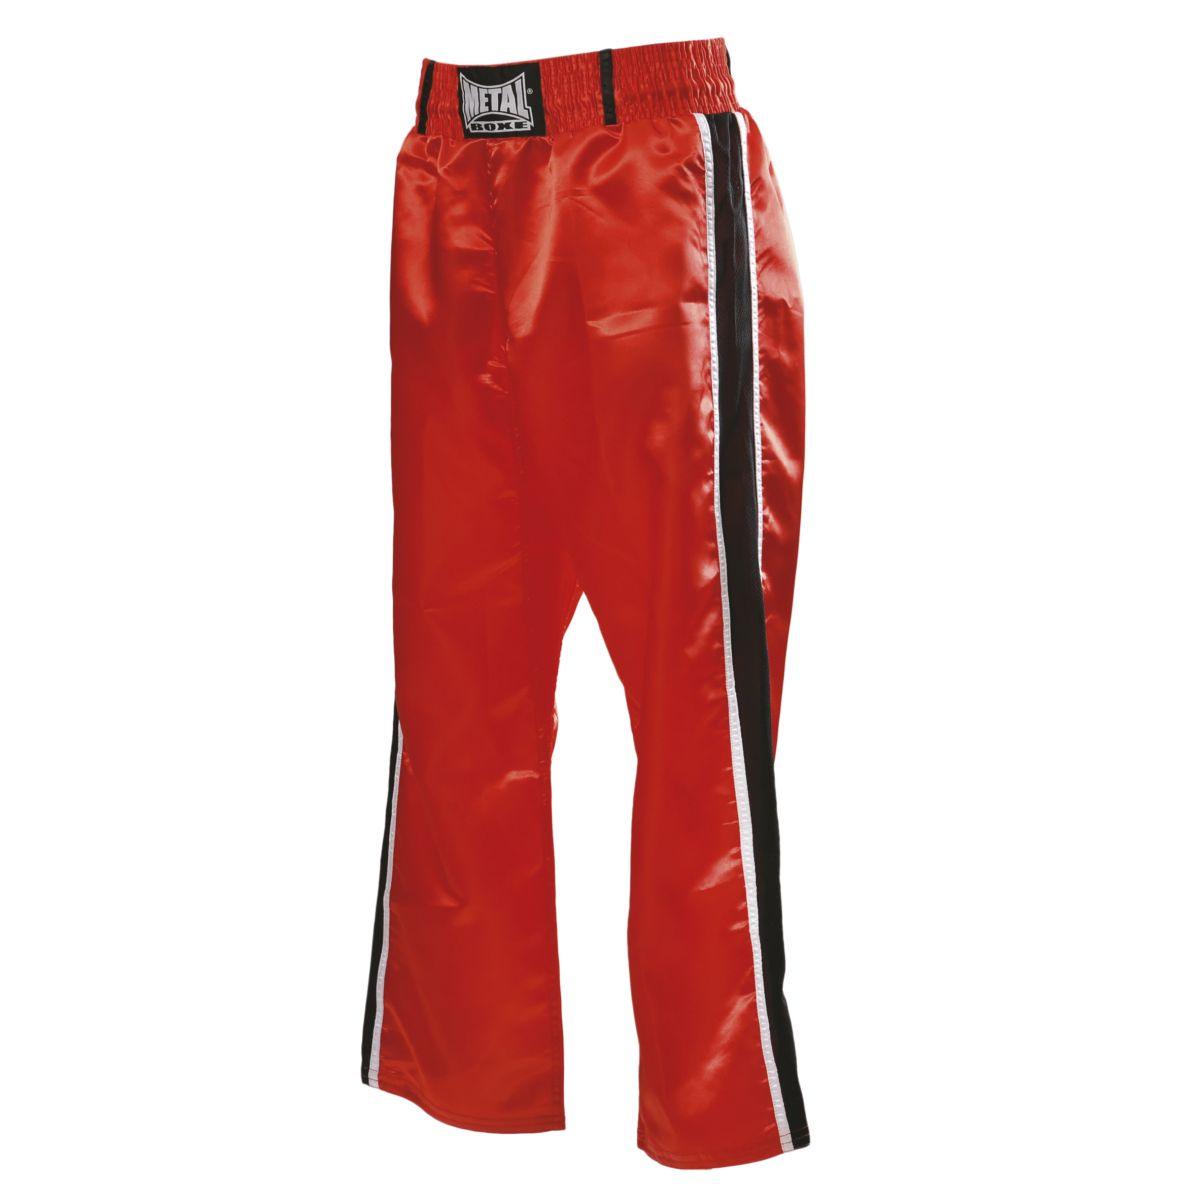 Pantalon de Full Contact Metal Boxe rouge